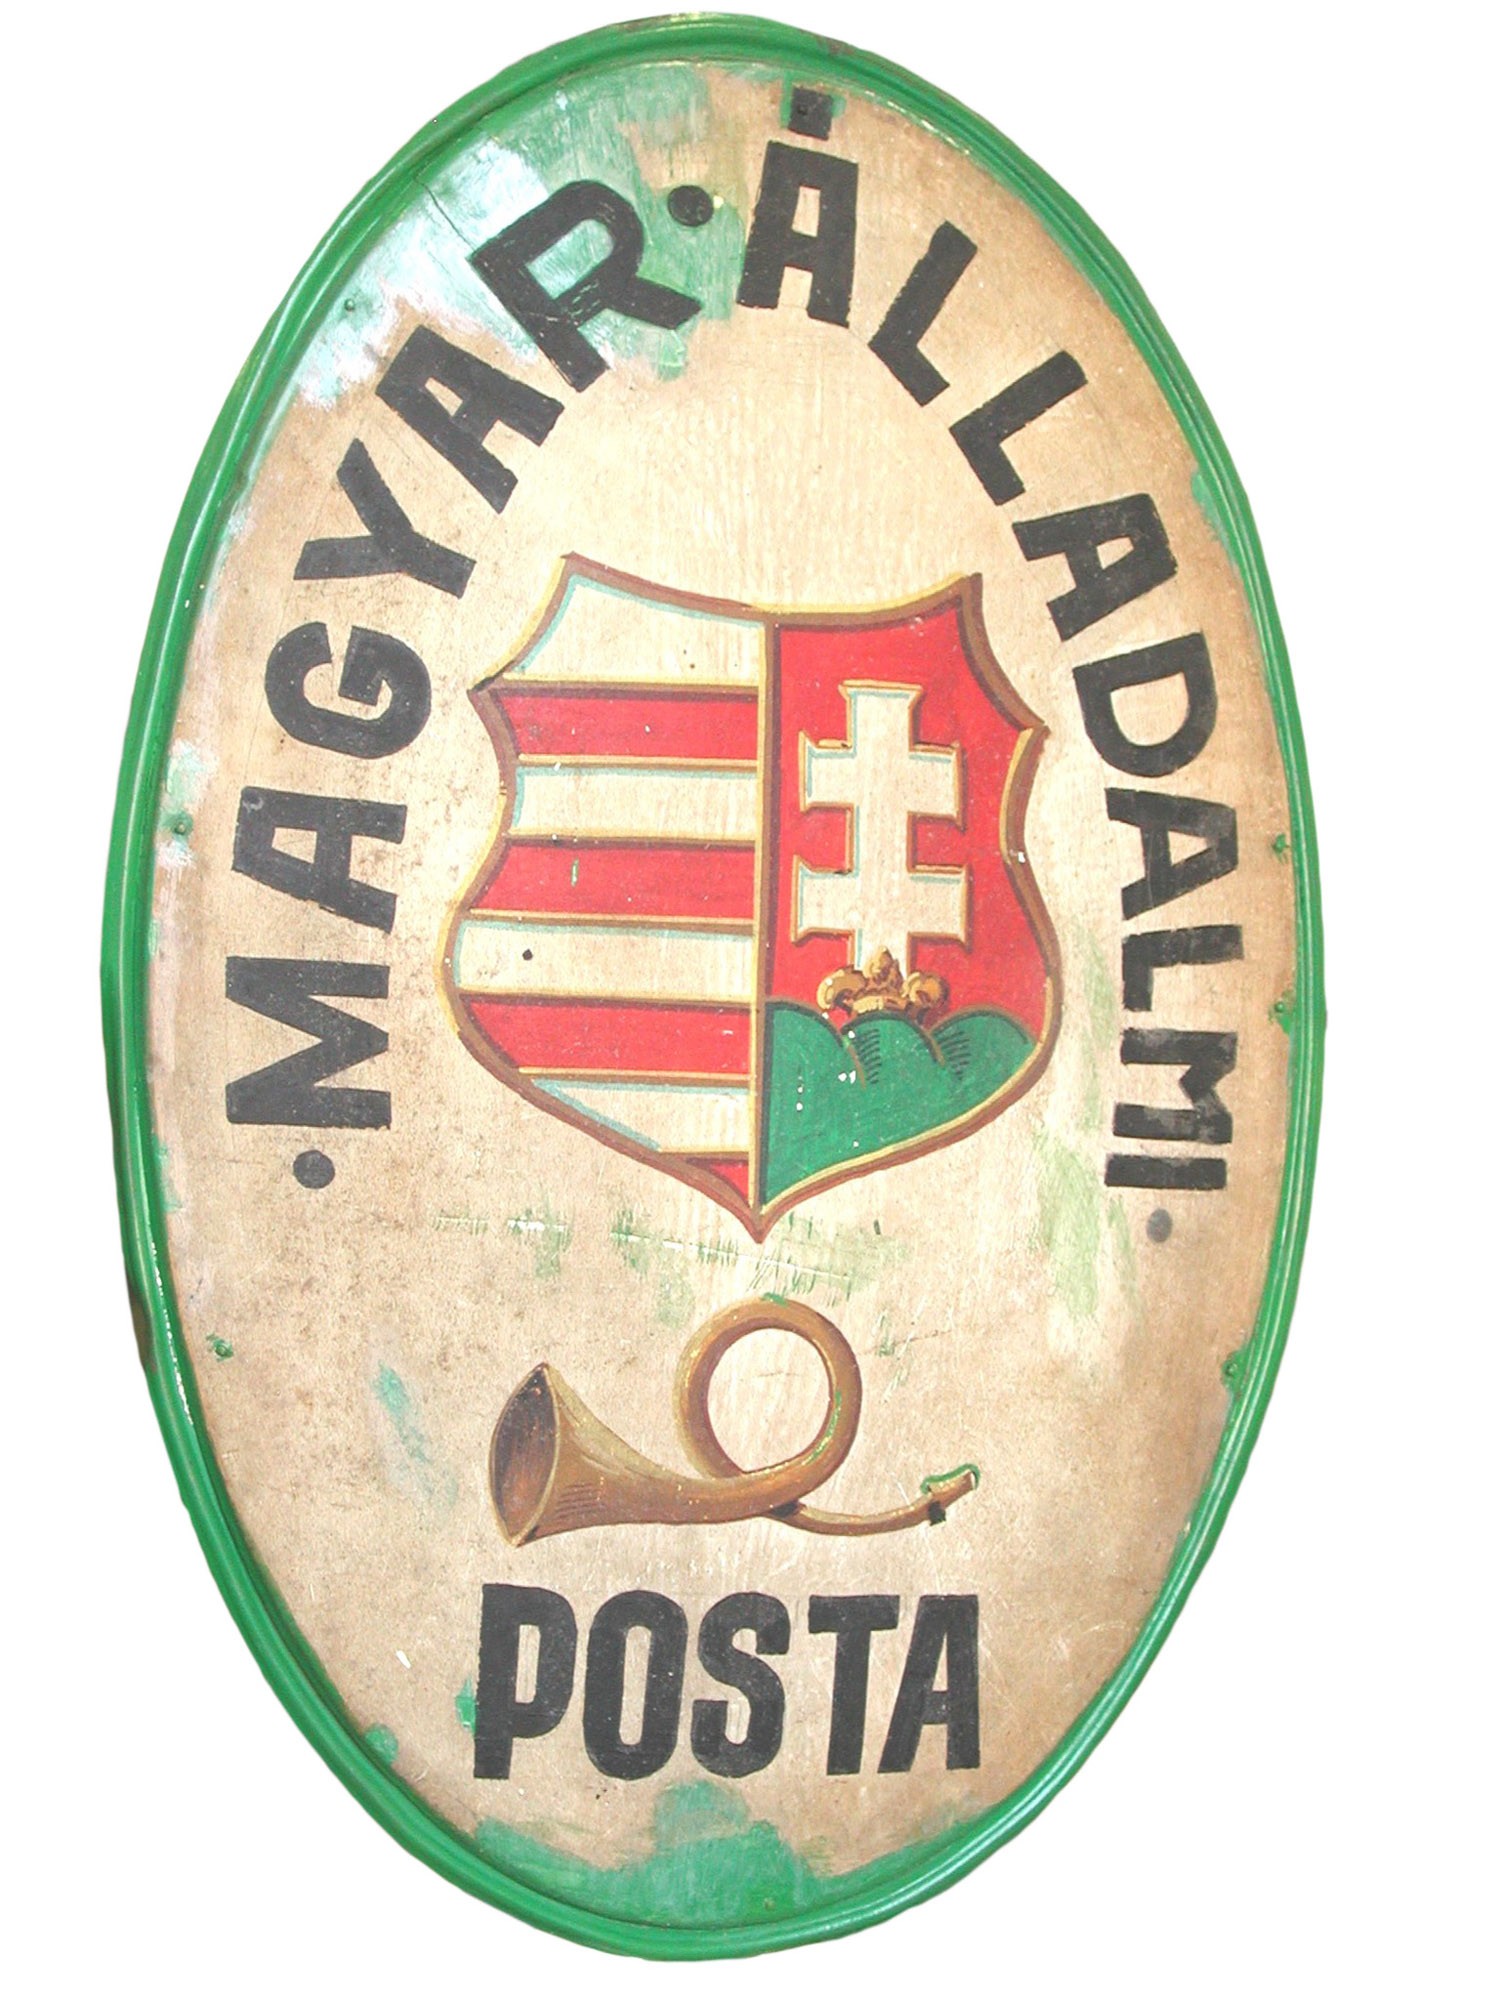 Címertábla "MAGYAR ÁLLADALMI POSTA" (Postamúzeum CC BY-NC-SA)